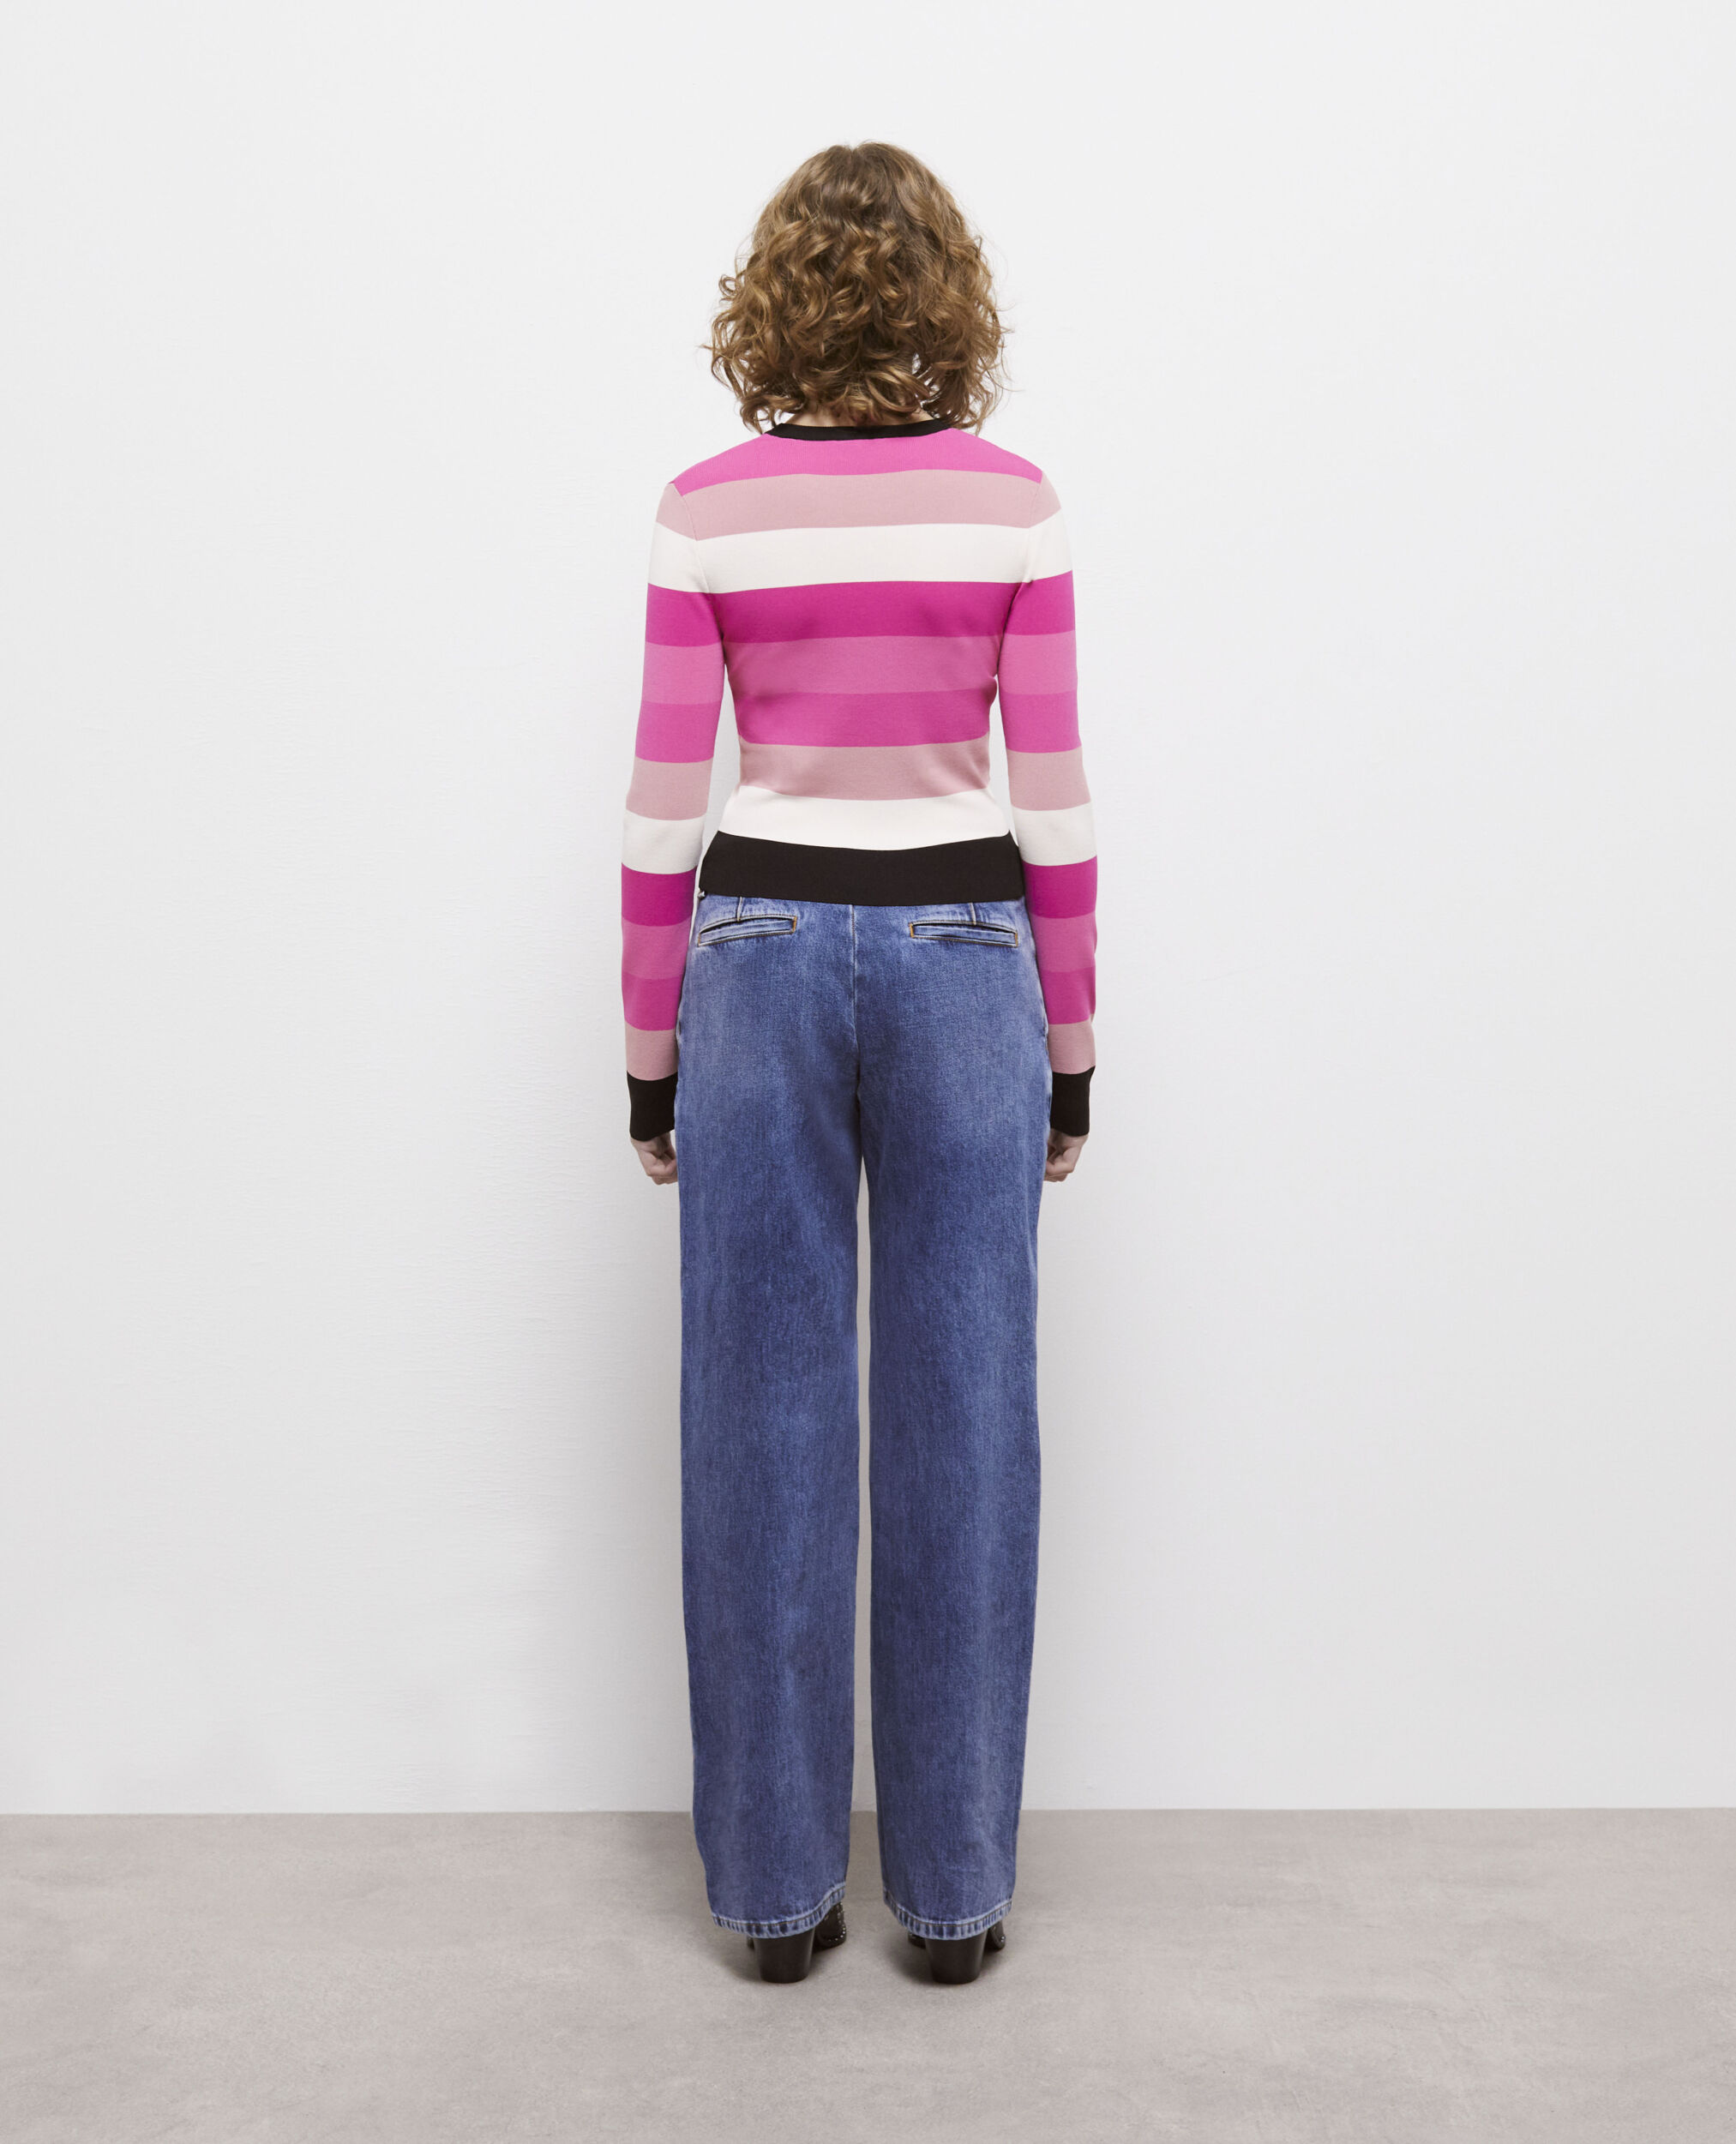 Short pink striped sweater, LIGHT PINK/DARK PINK/BLAC, hi-res image number null